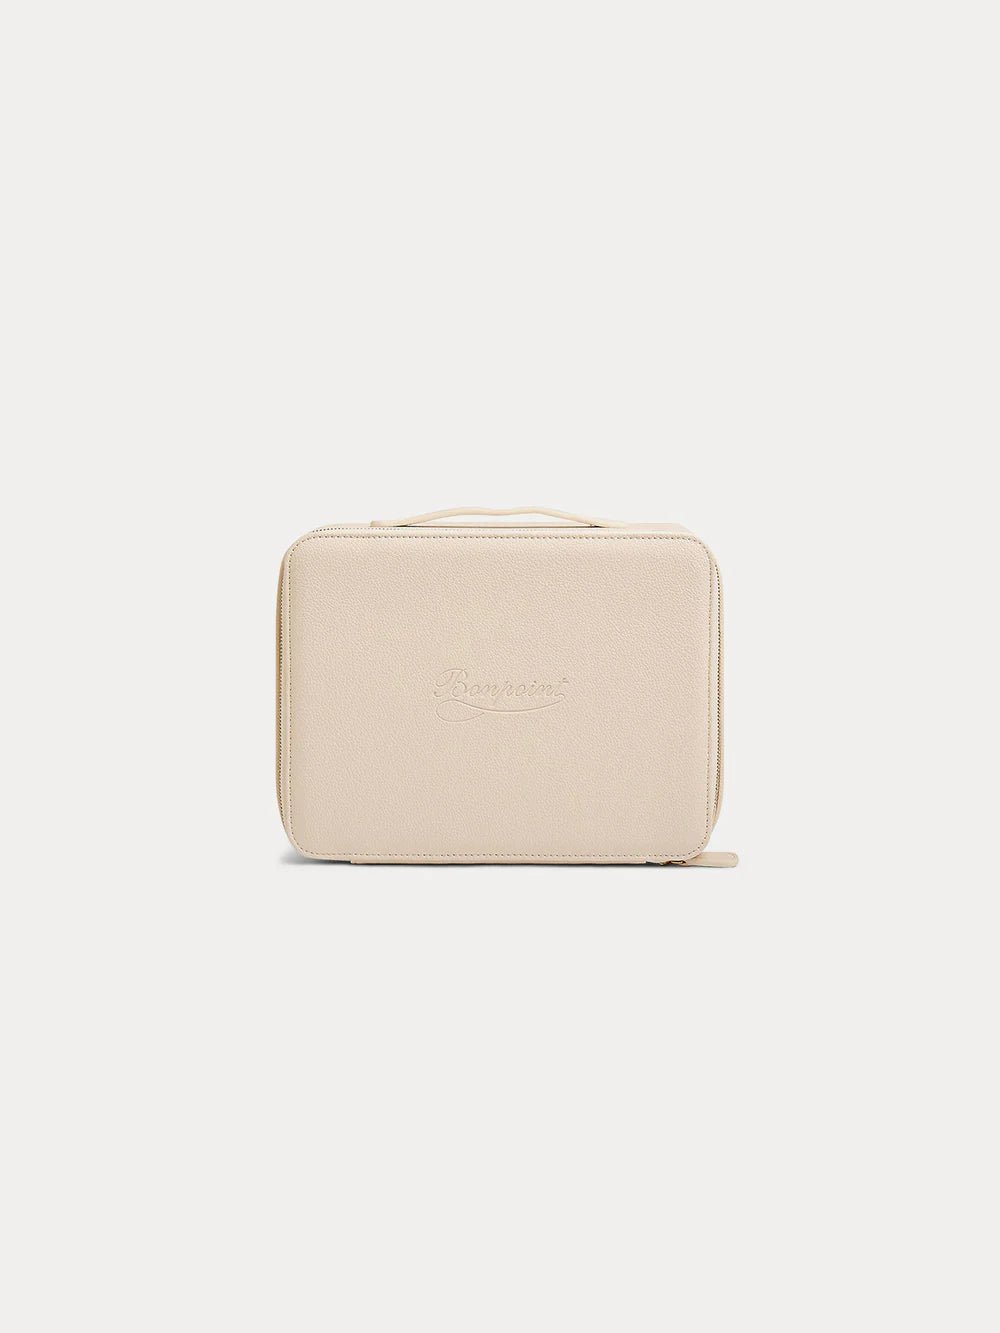 Suitcase Milk White - 2 - Posh New York